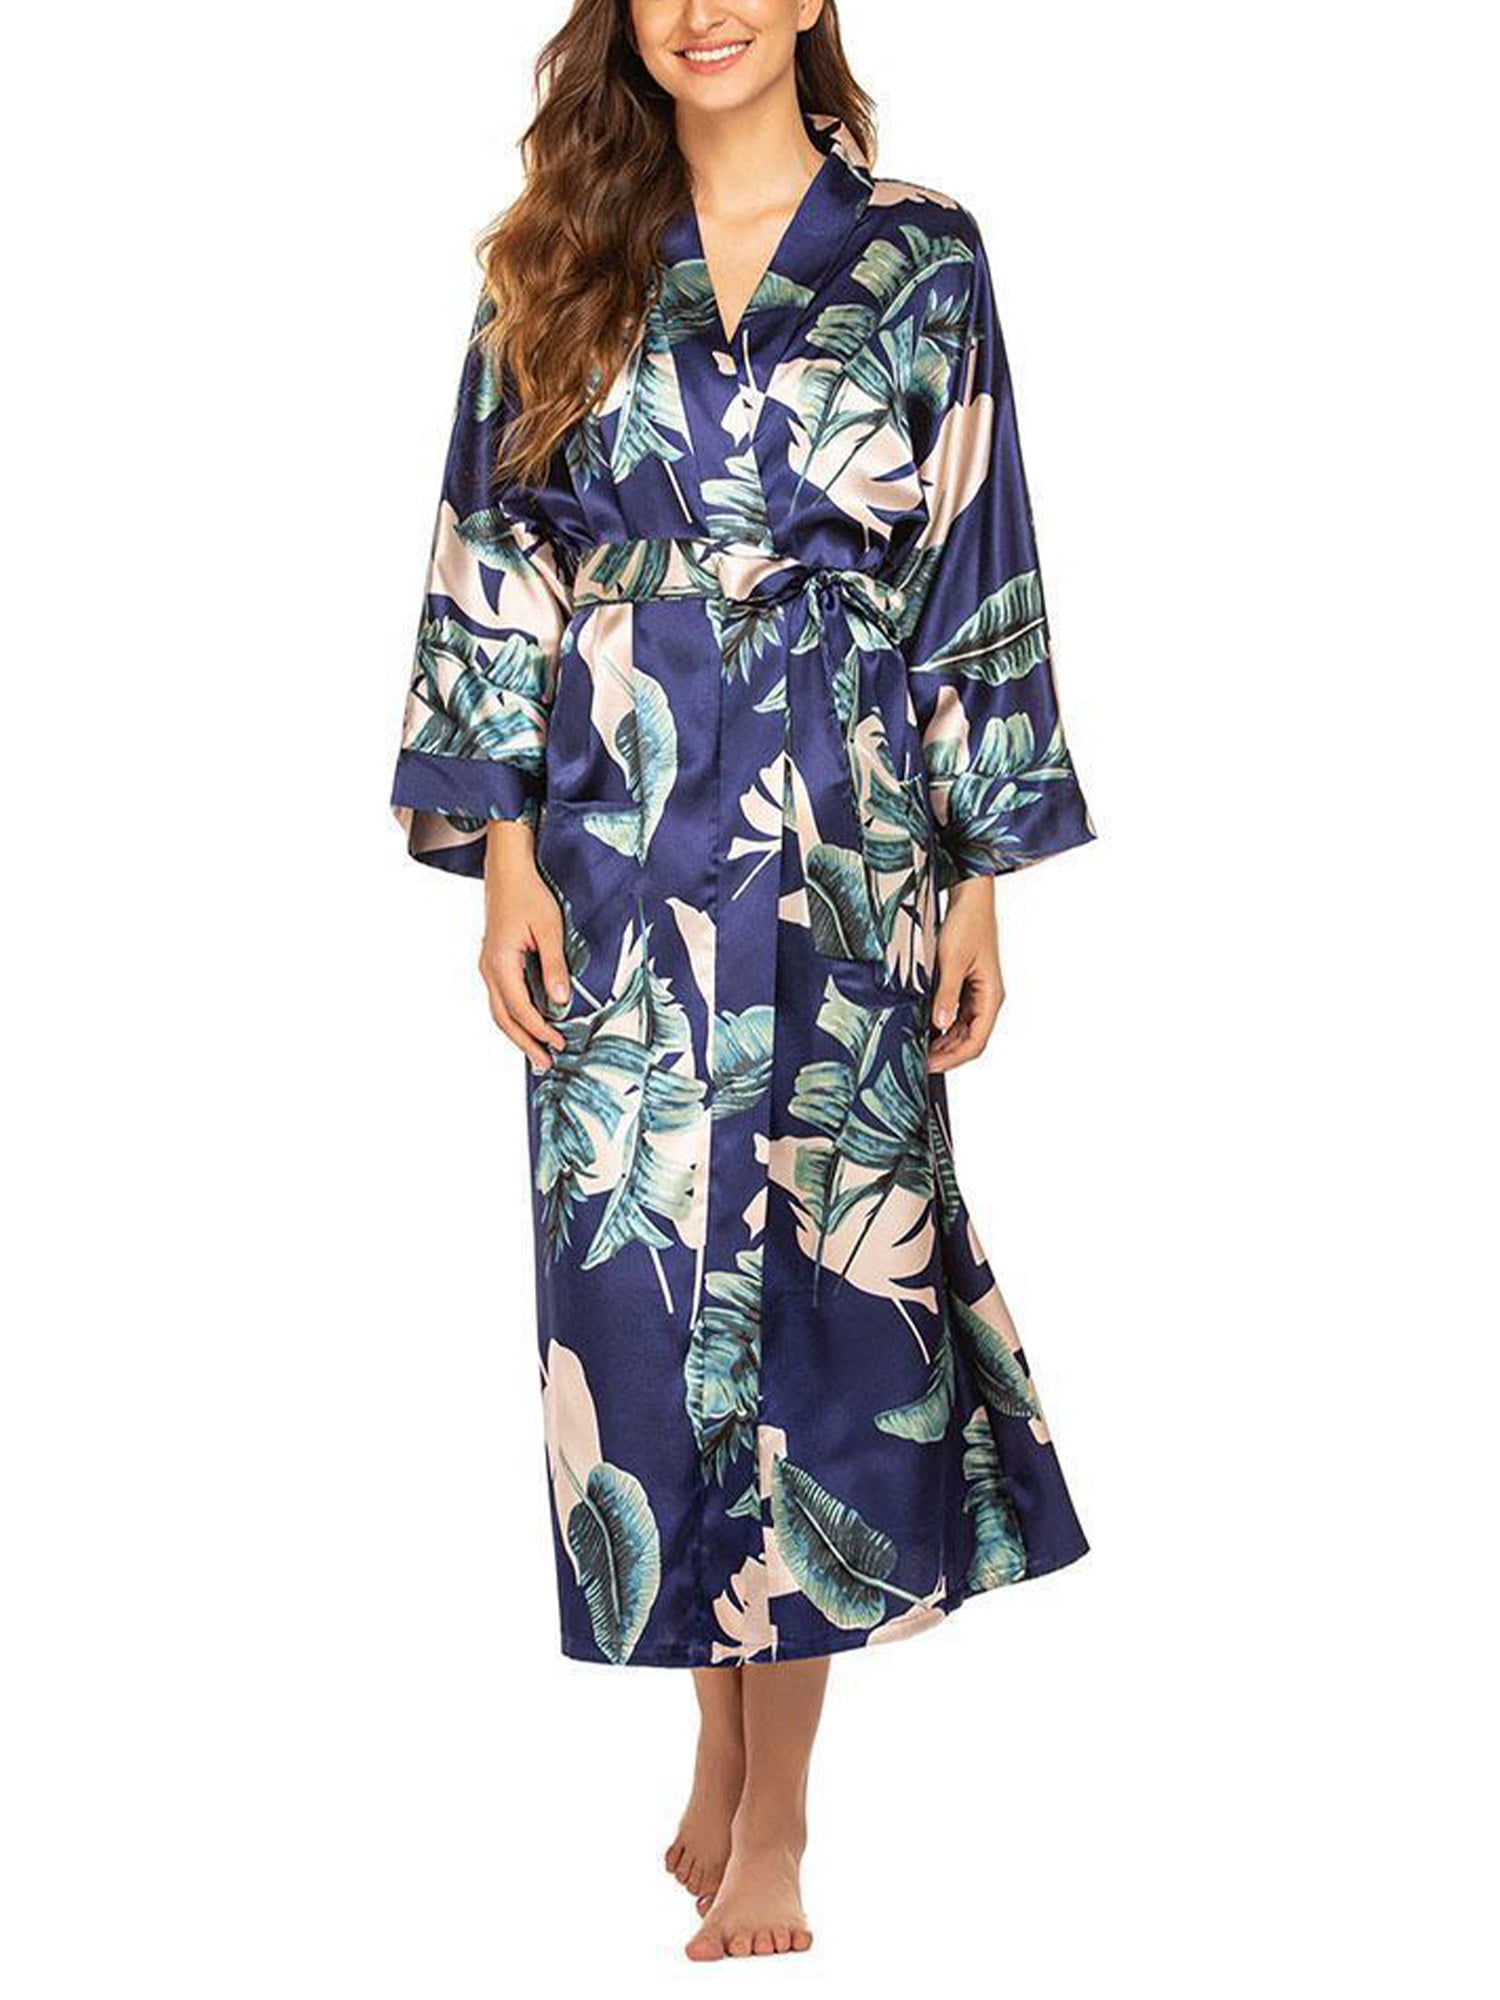 Women Plus Size Kimono Robes Cotton Knee Length Robe Knit Bathrobe Soft Sleepwear Ladies Loungewear XL-5XL